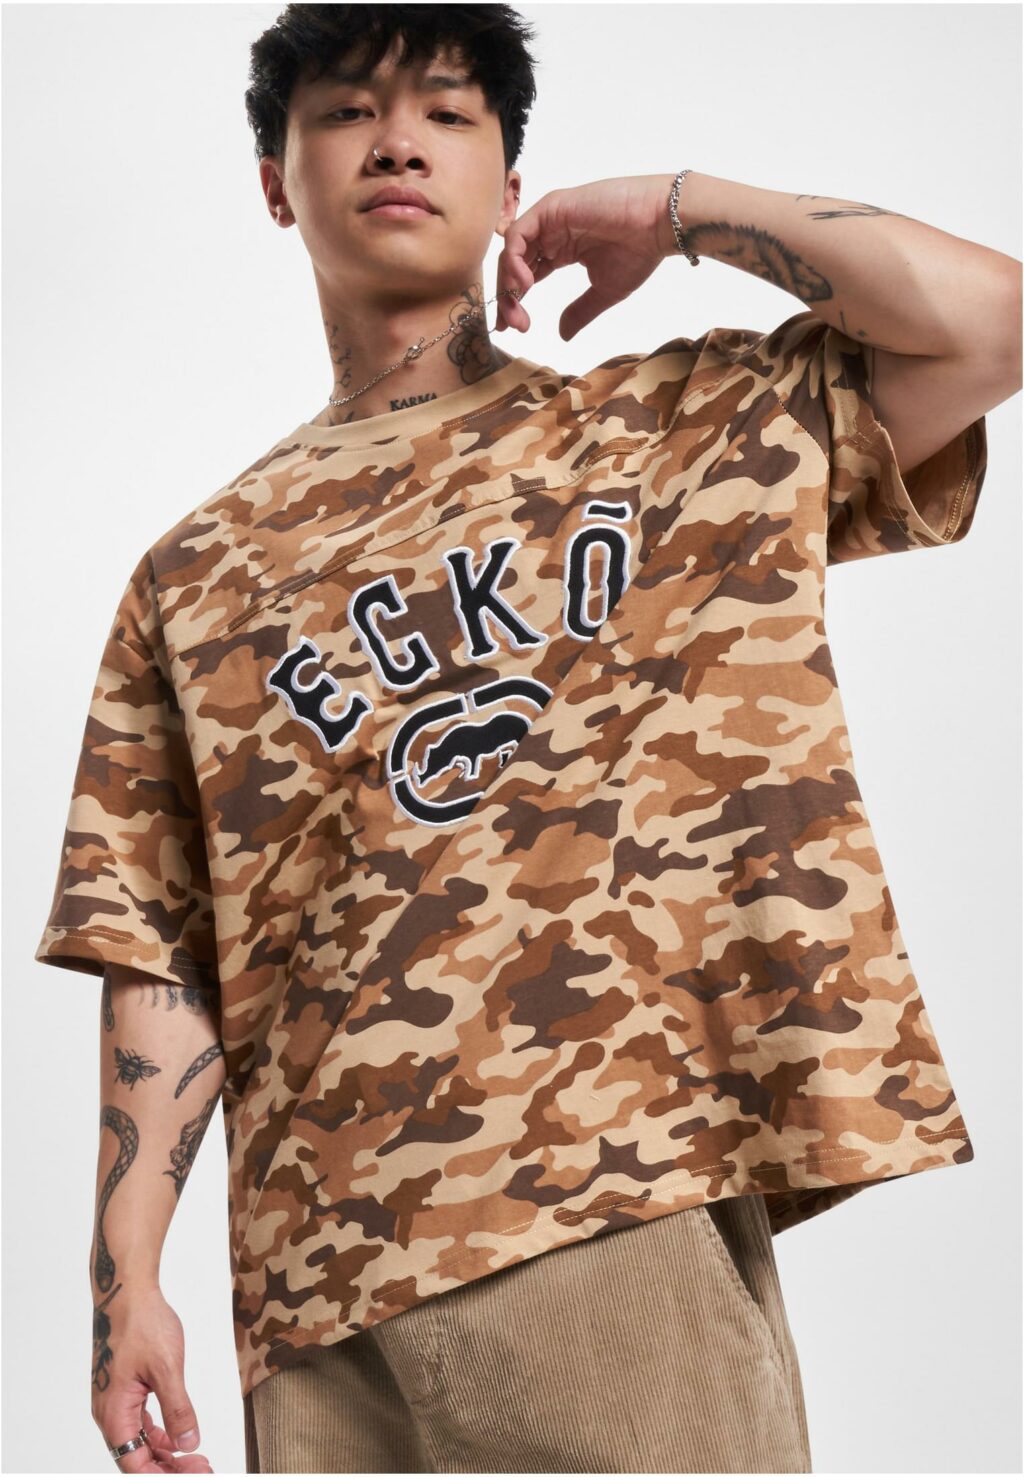 Ecko Unltd. Tshirt BBall camouflage/camel/brown ECKOTS1144